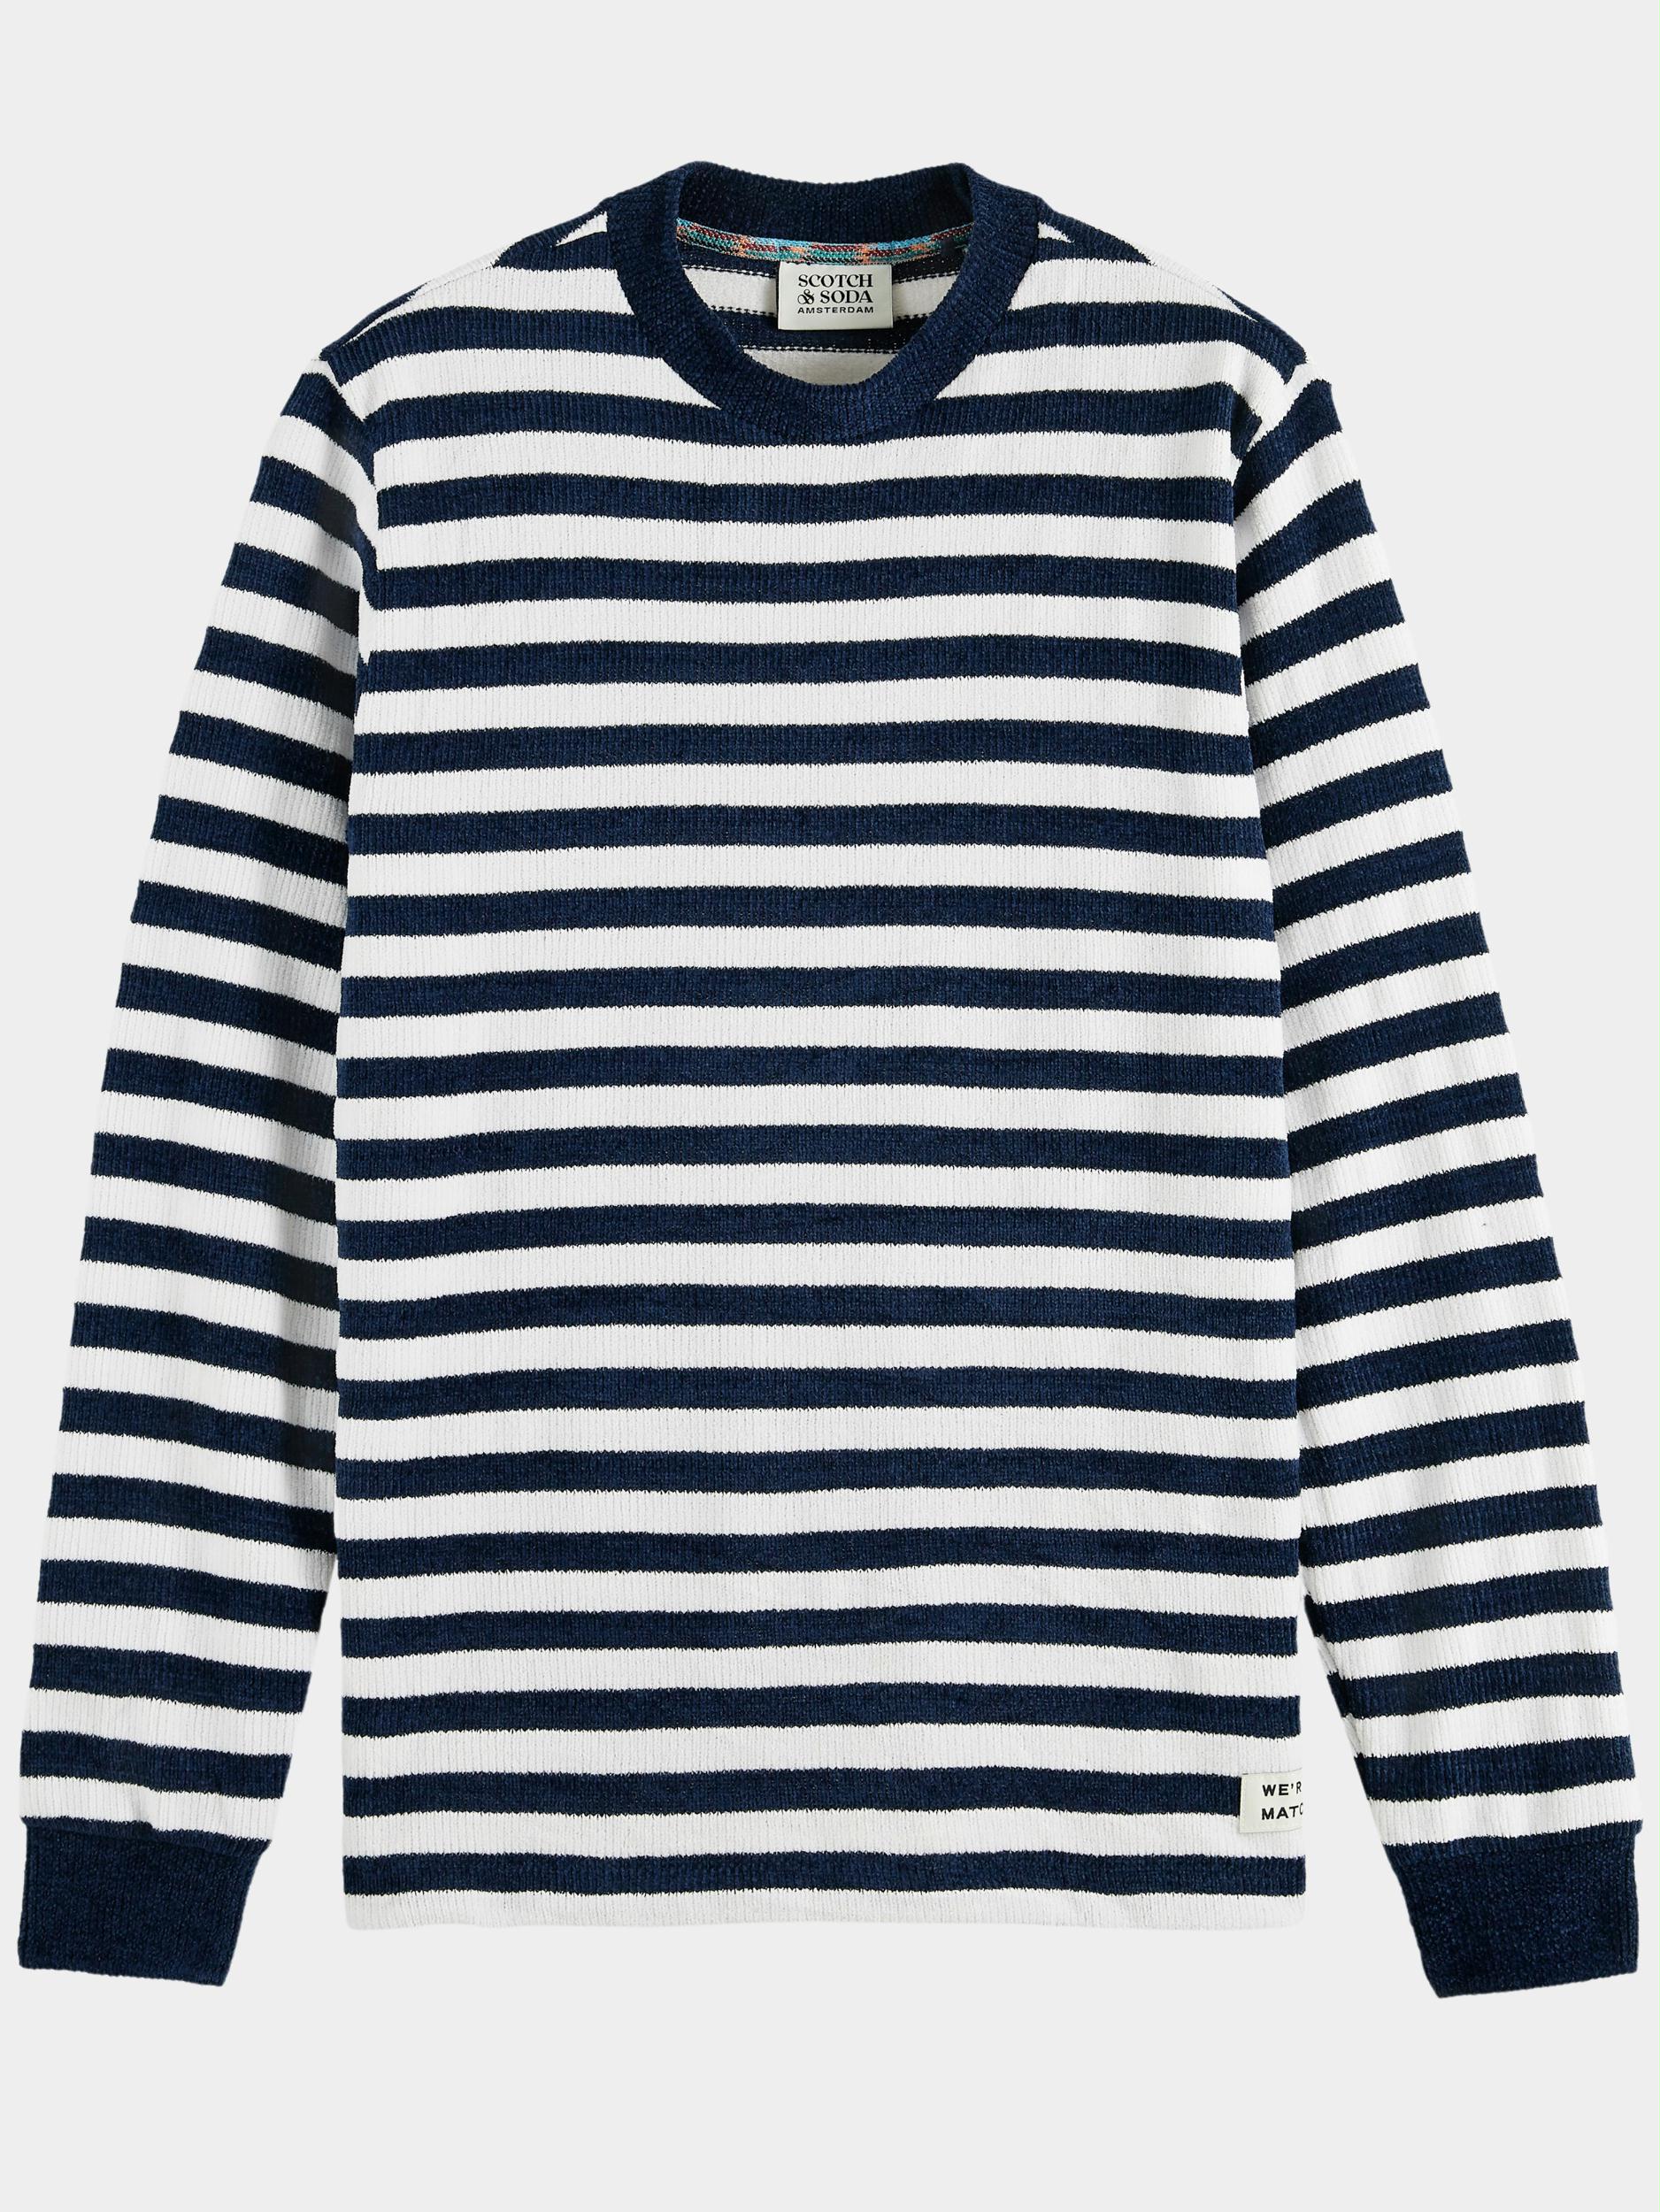 Scotch & Soda Sweater Multi Textured stripe sweatshirt 169911/0218